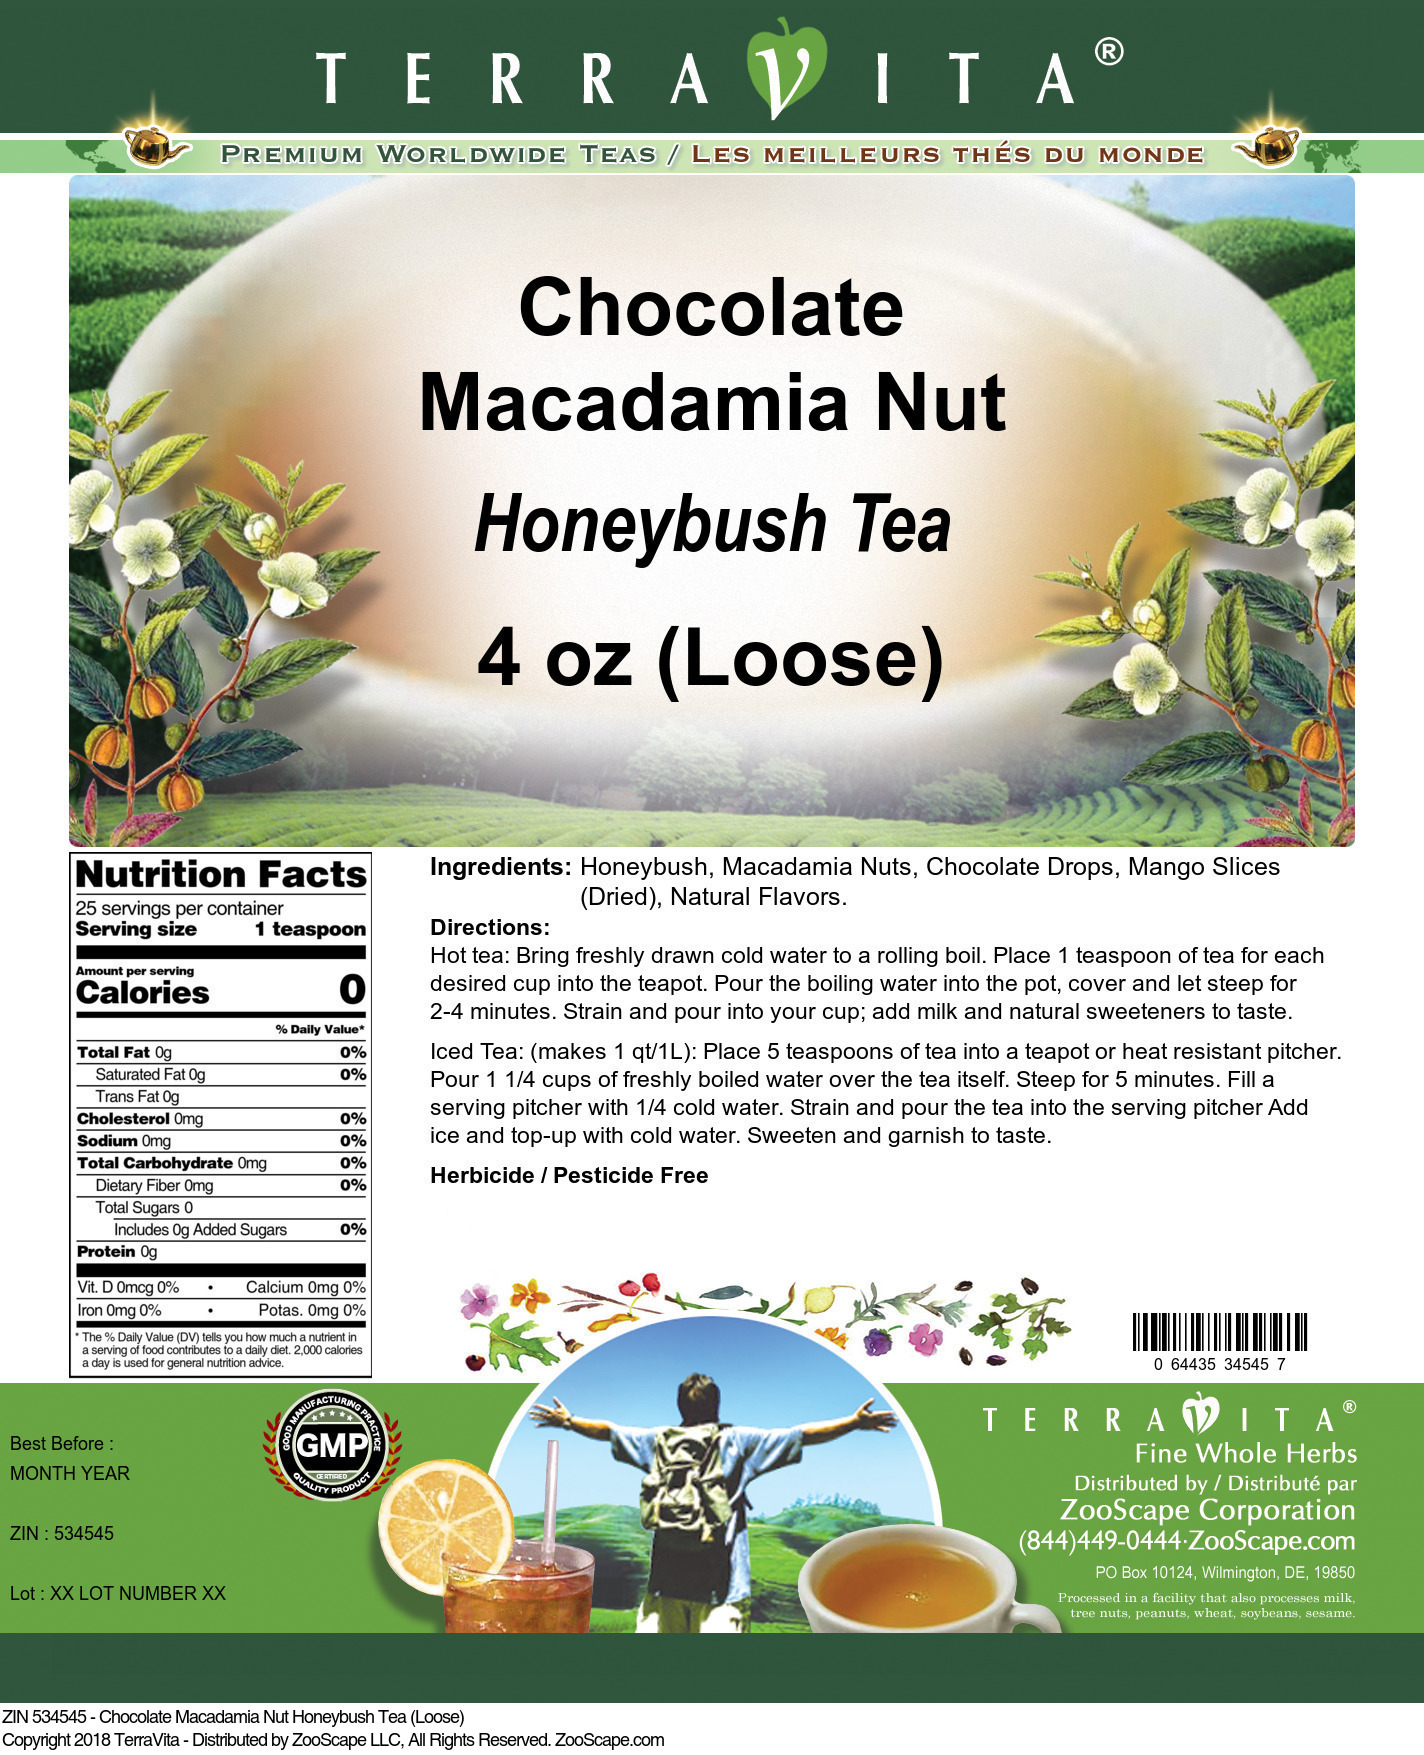 Chocolate Macadamia Nut Honeybush Tea (Loose) - Label